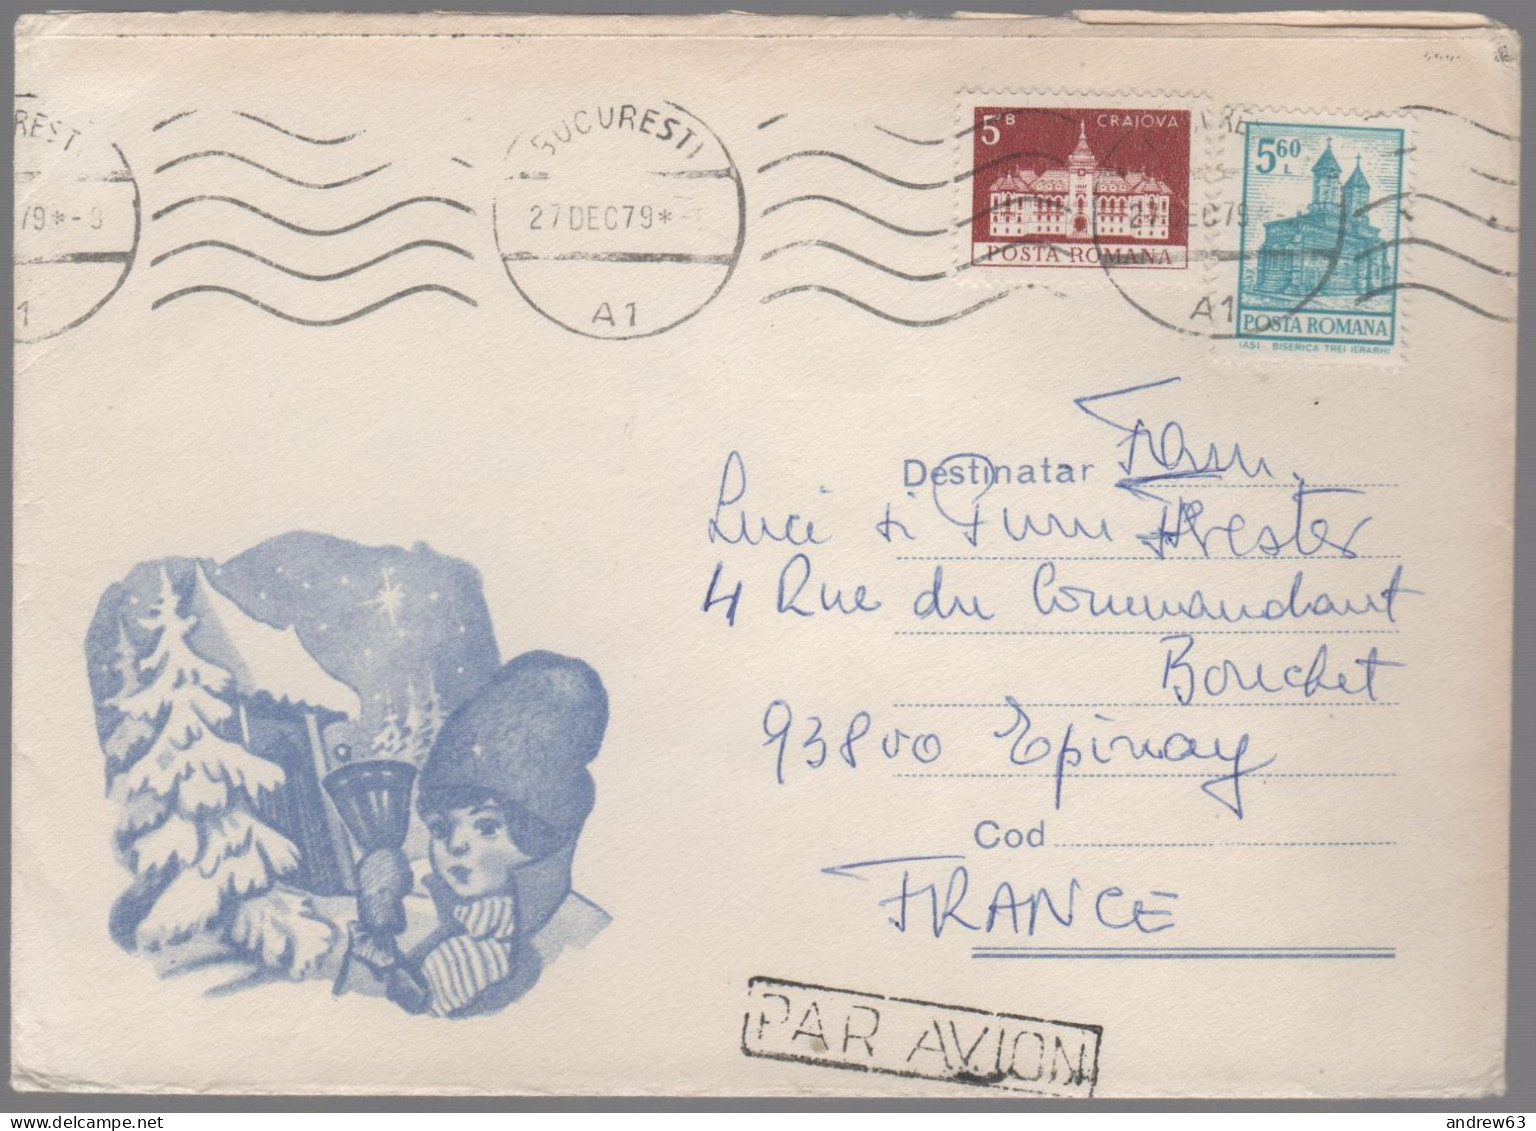 ROMANIA - Rumänien - Posta Romana - 1979 - 5 B + 5,60 L - Viaggiata Da Bucuresti Per Épinay-sur-Seine, France - Lettres & Documents